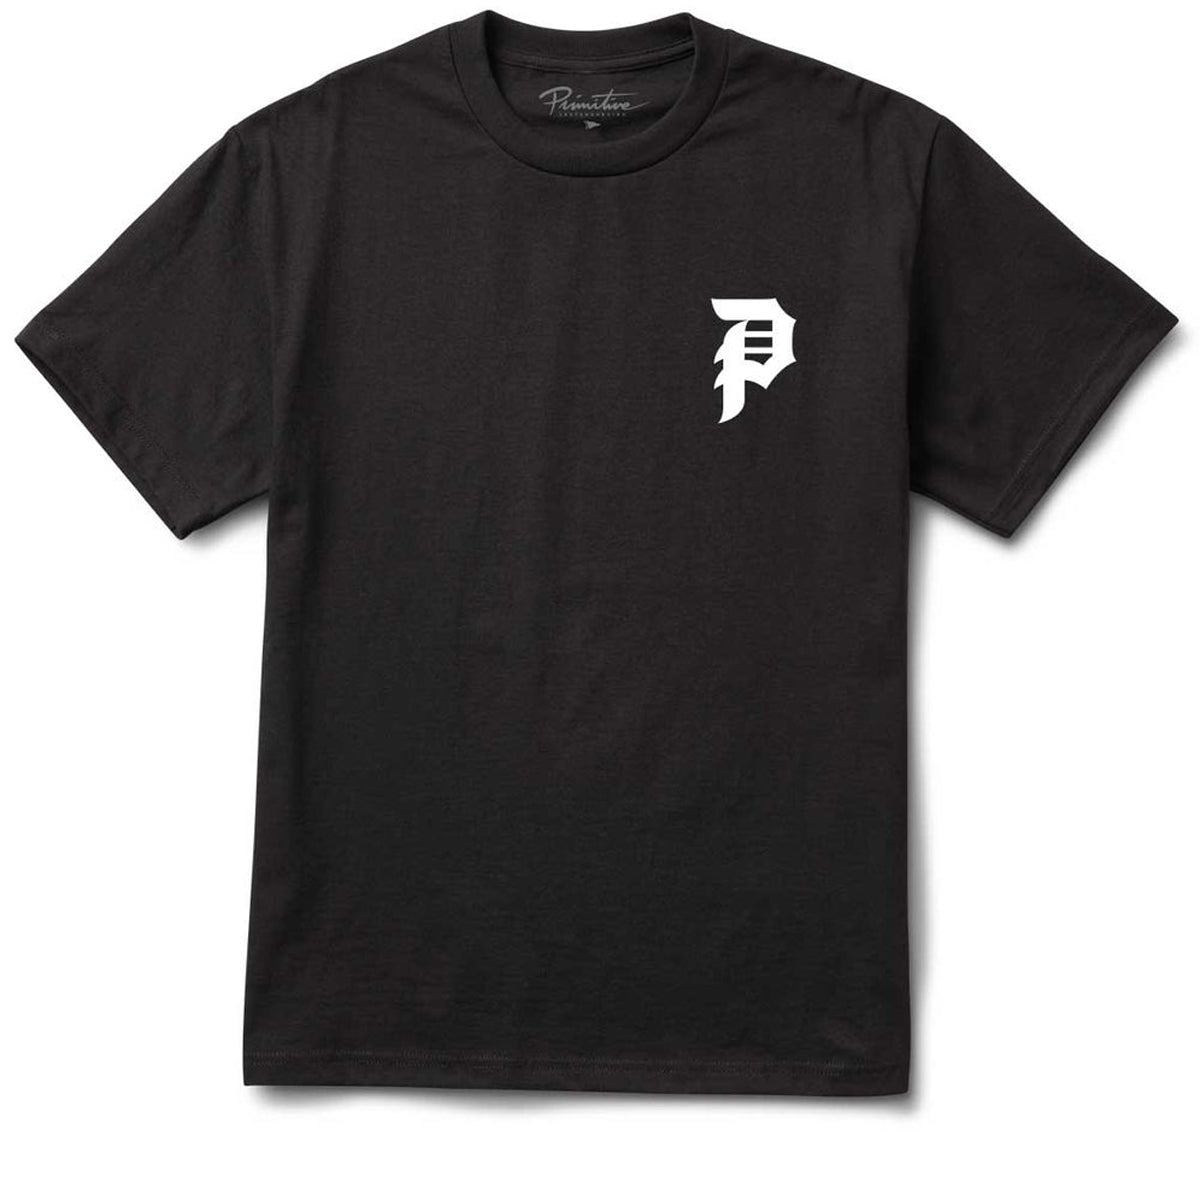 Primitive x Guns N' Roses Cross T-Shirt - Black image 2